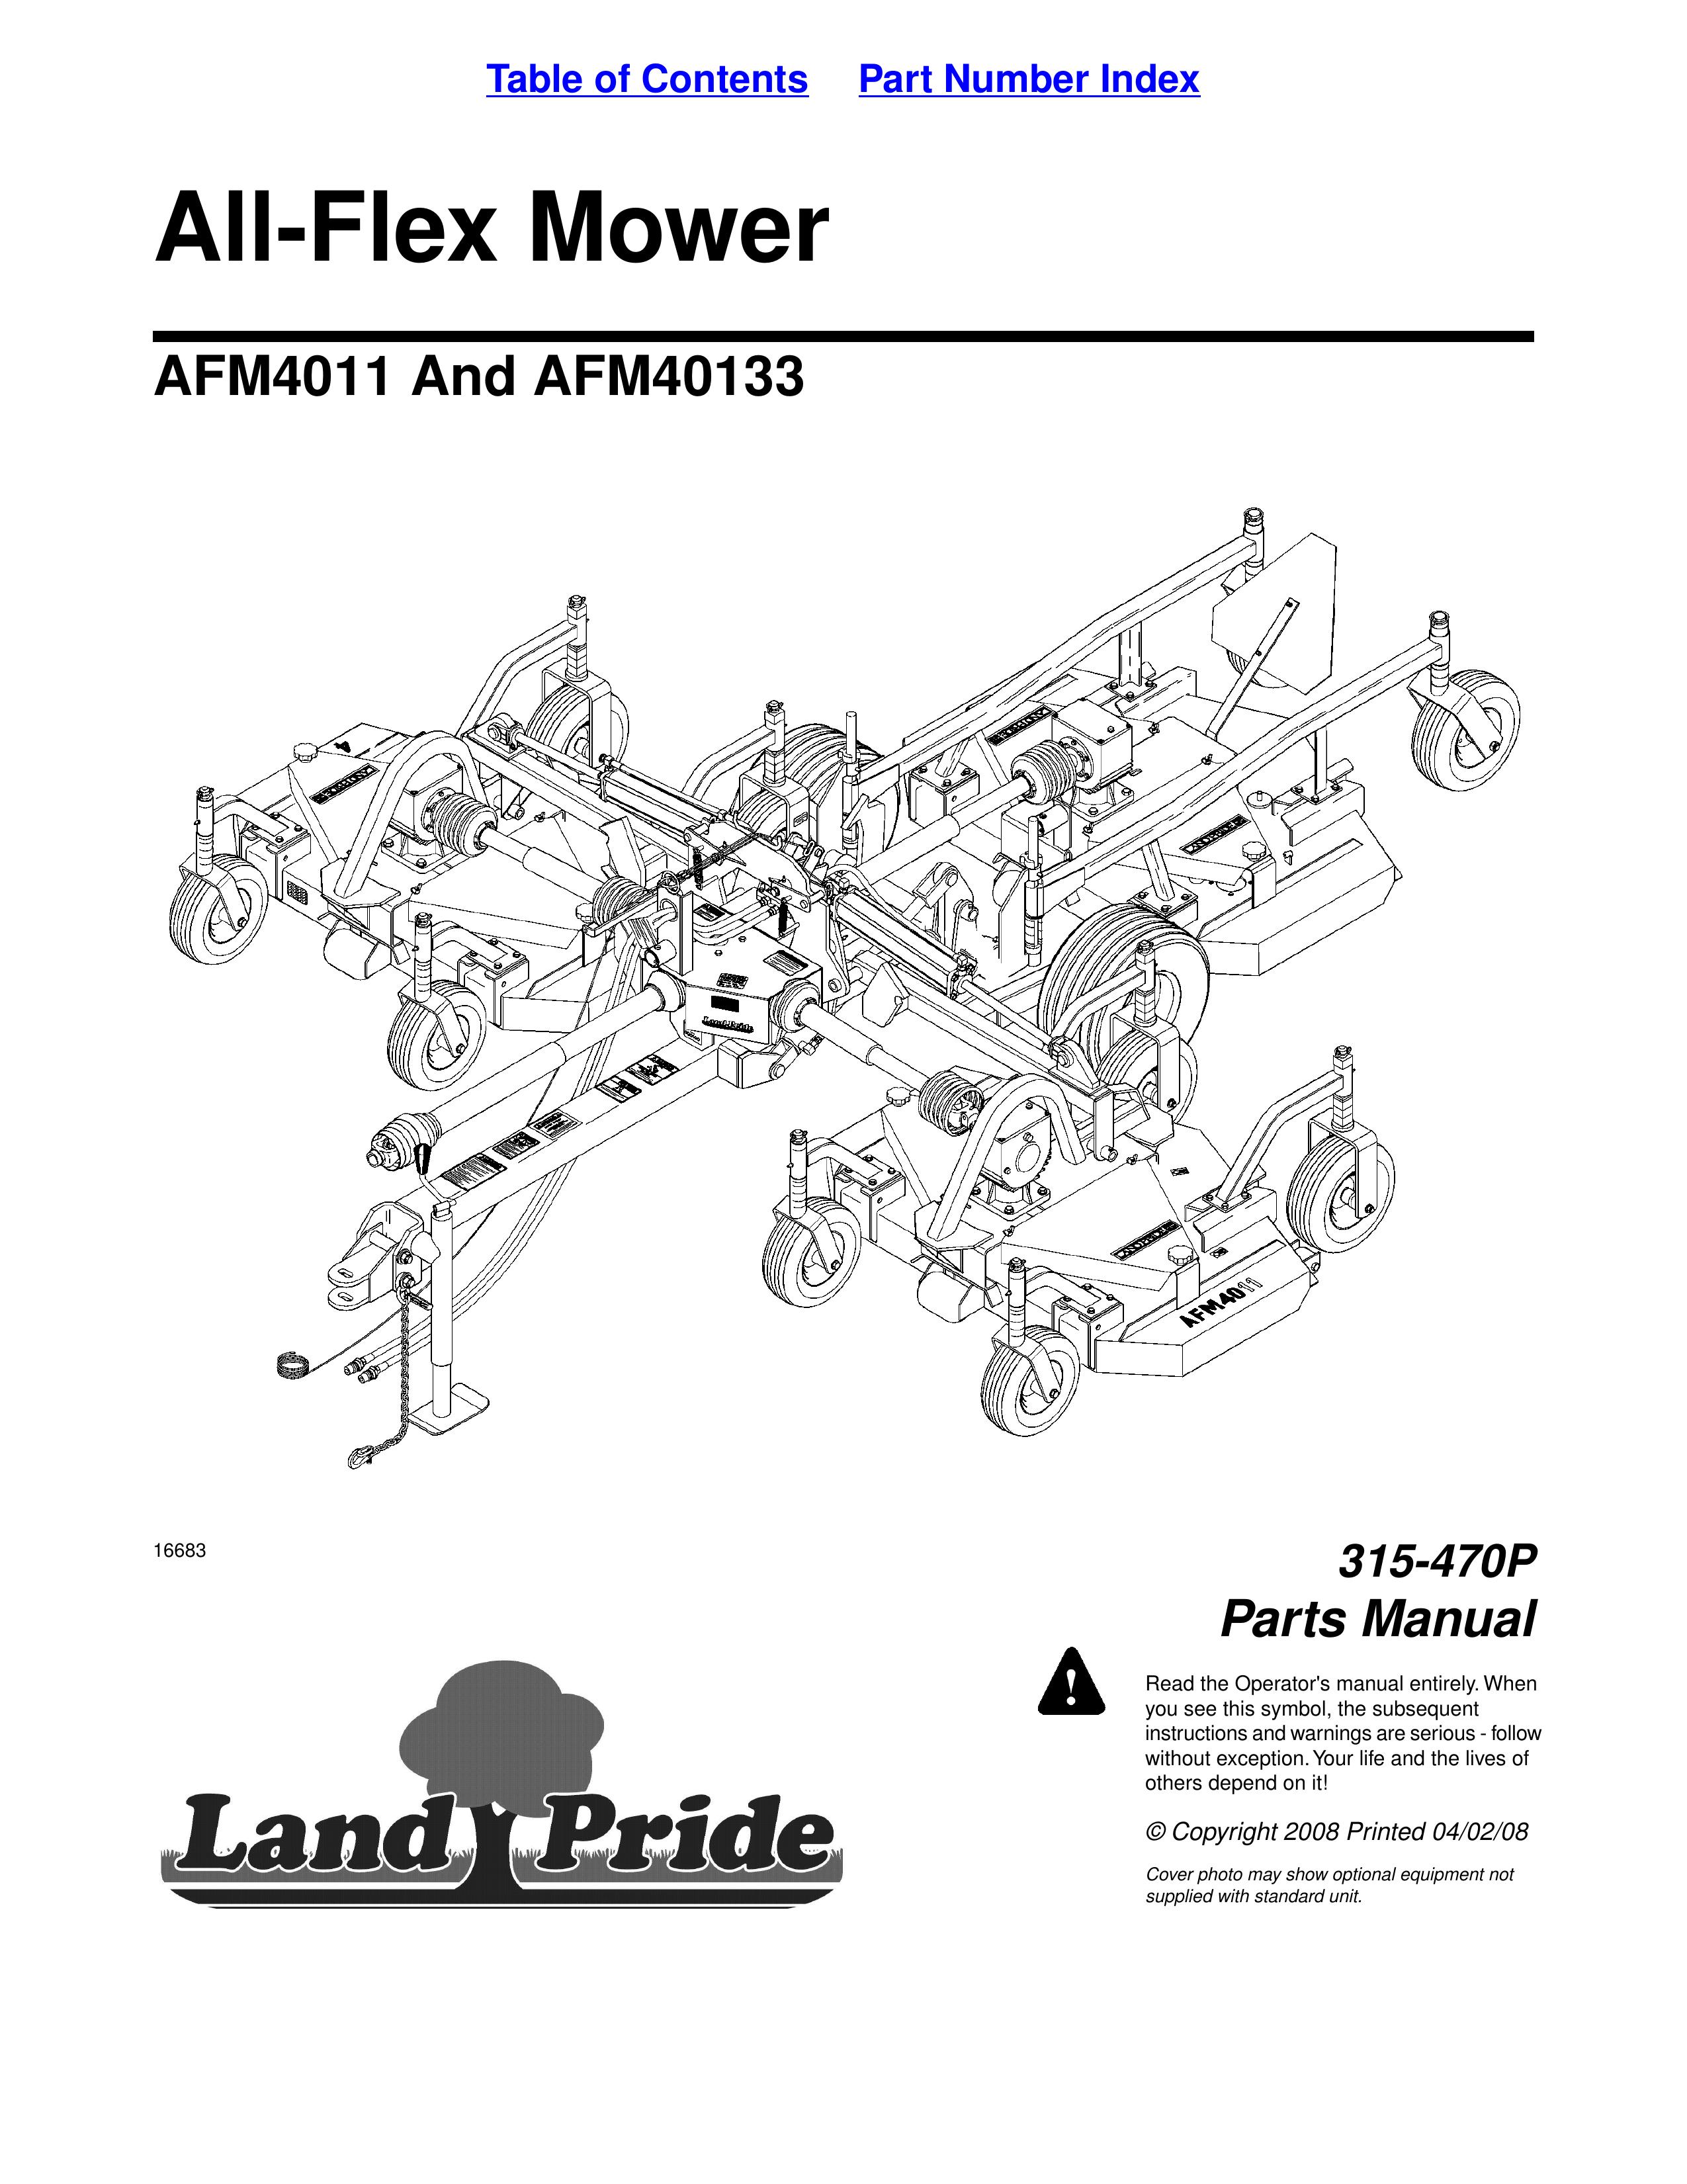 Land Pride AFM40133 Lawn Mower User Manual